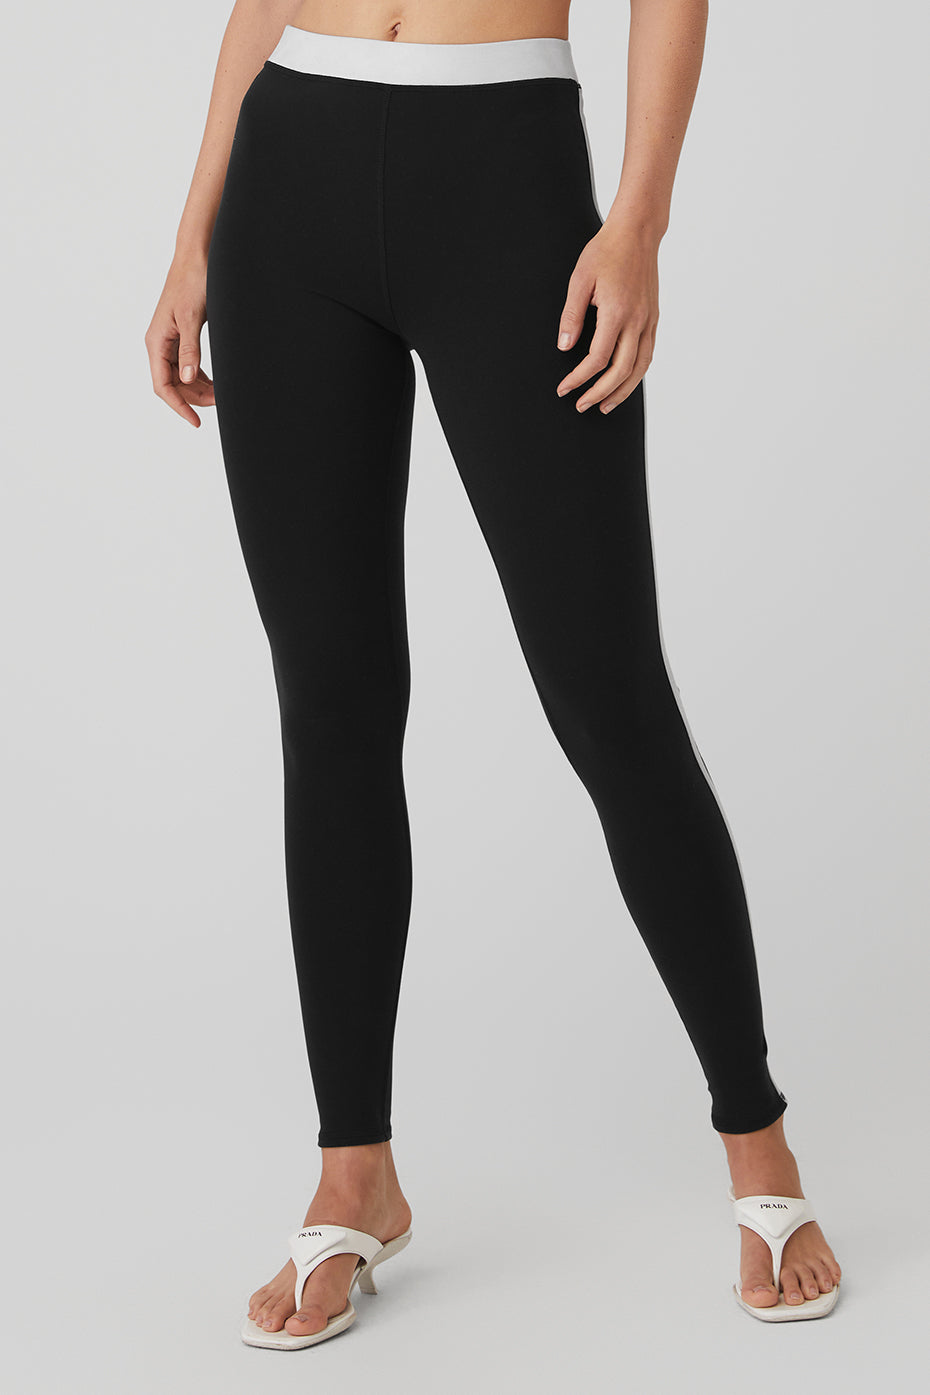 Alo Yoga airbrush high-waist bootcut leggings Black - $50 (54% Off Retail)  - From Jenna